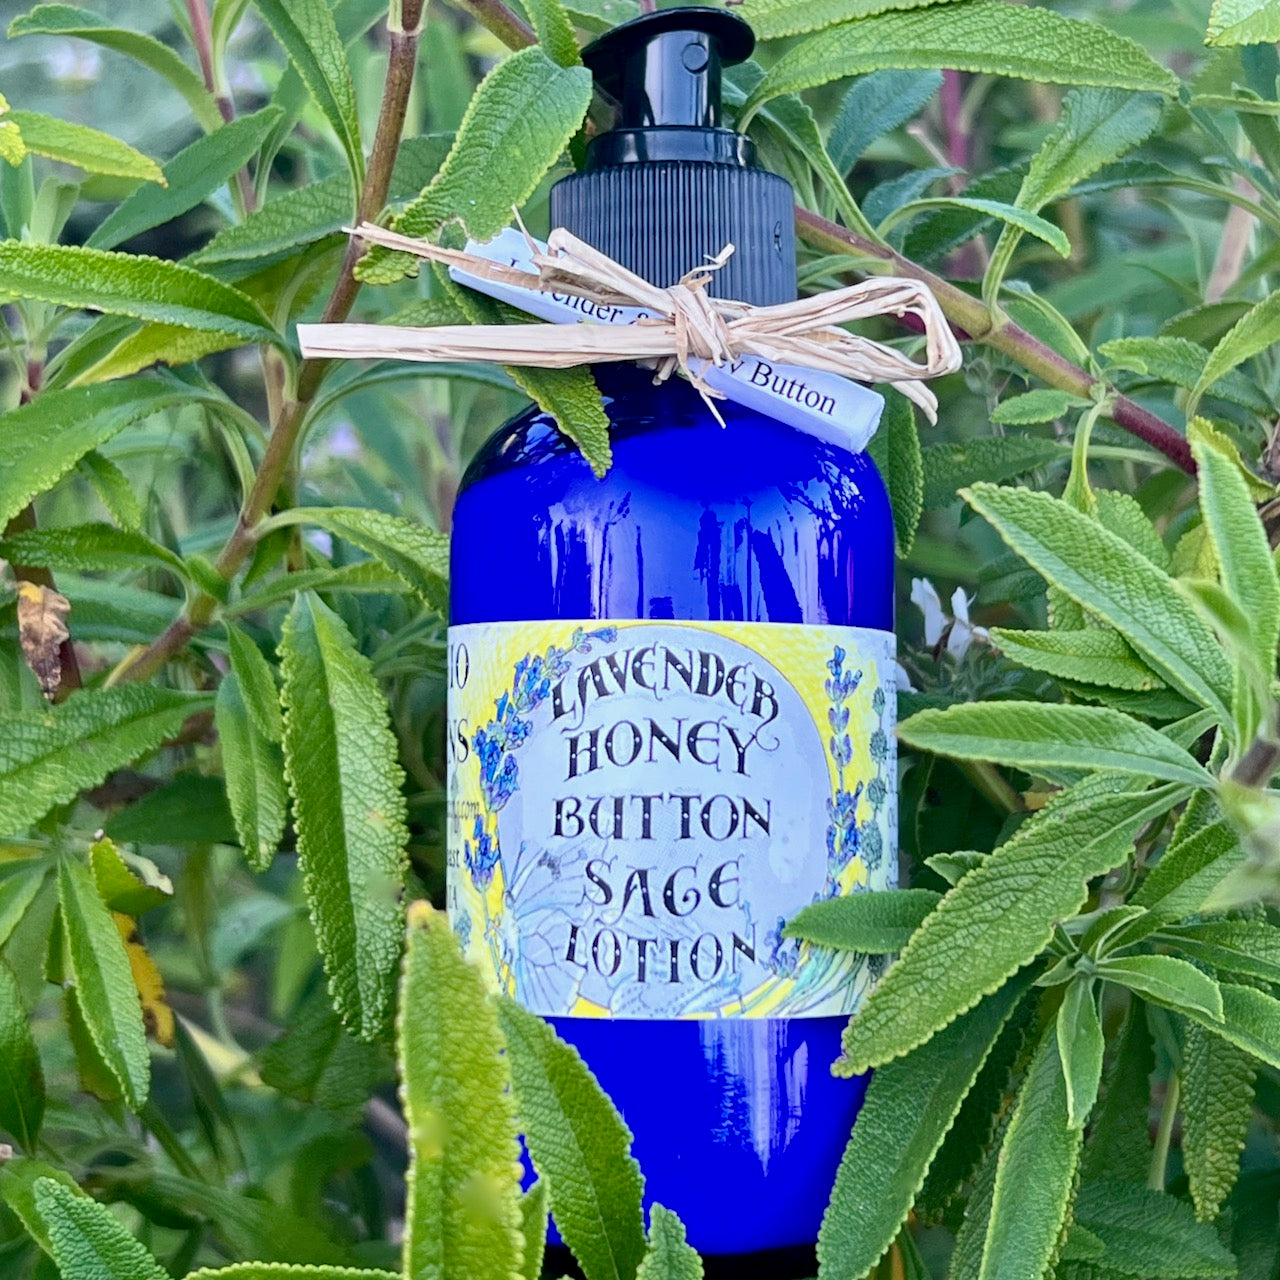 Photo of lavender honey button sage lotion bottle